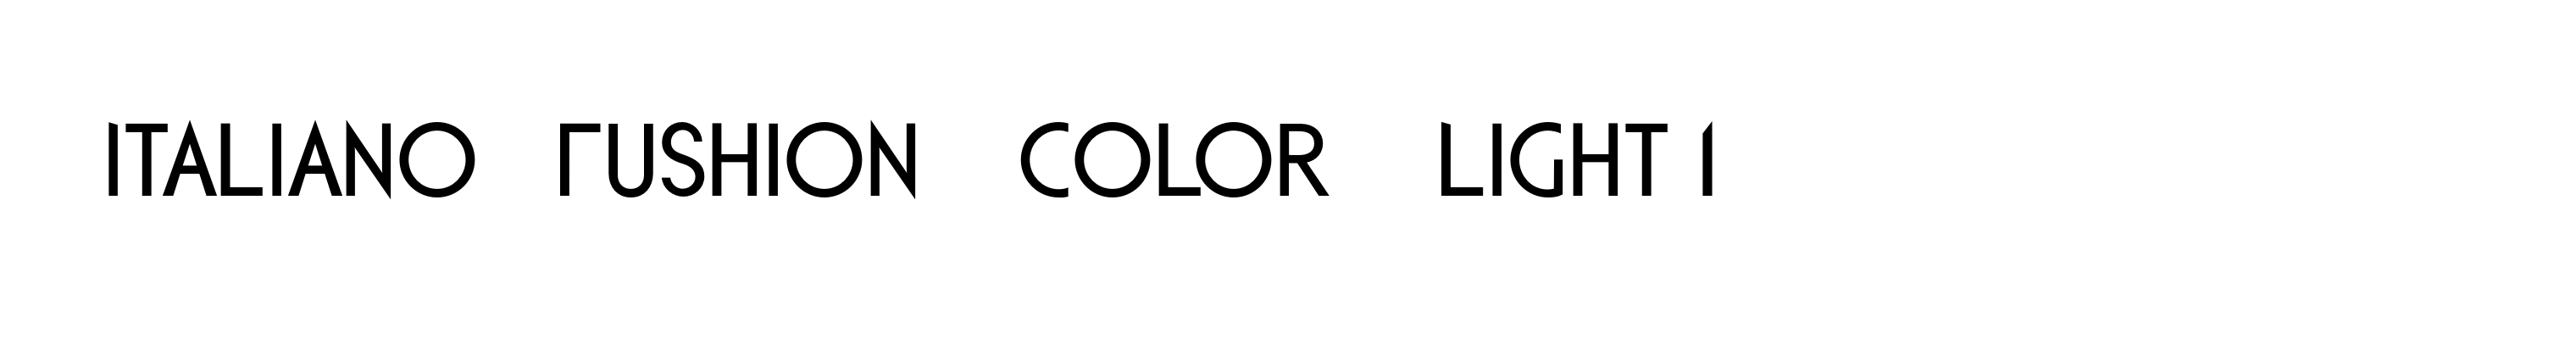 Italiano Fushion Color Light 1